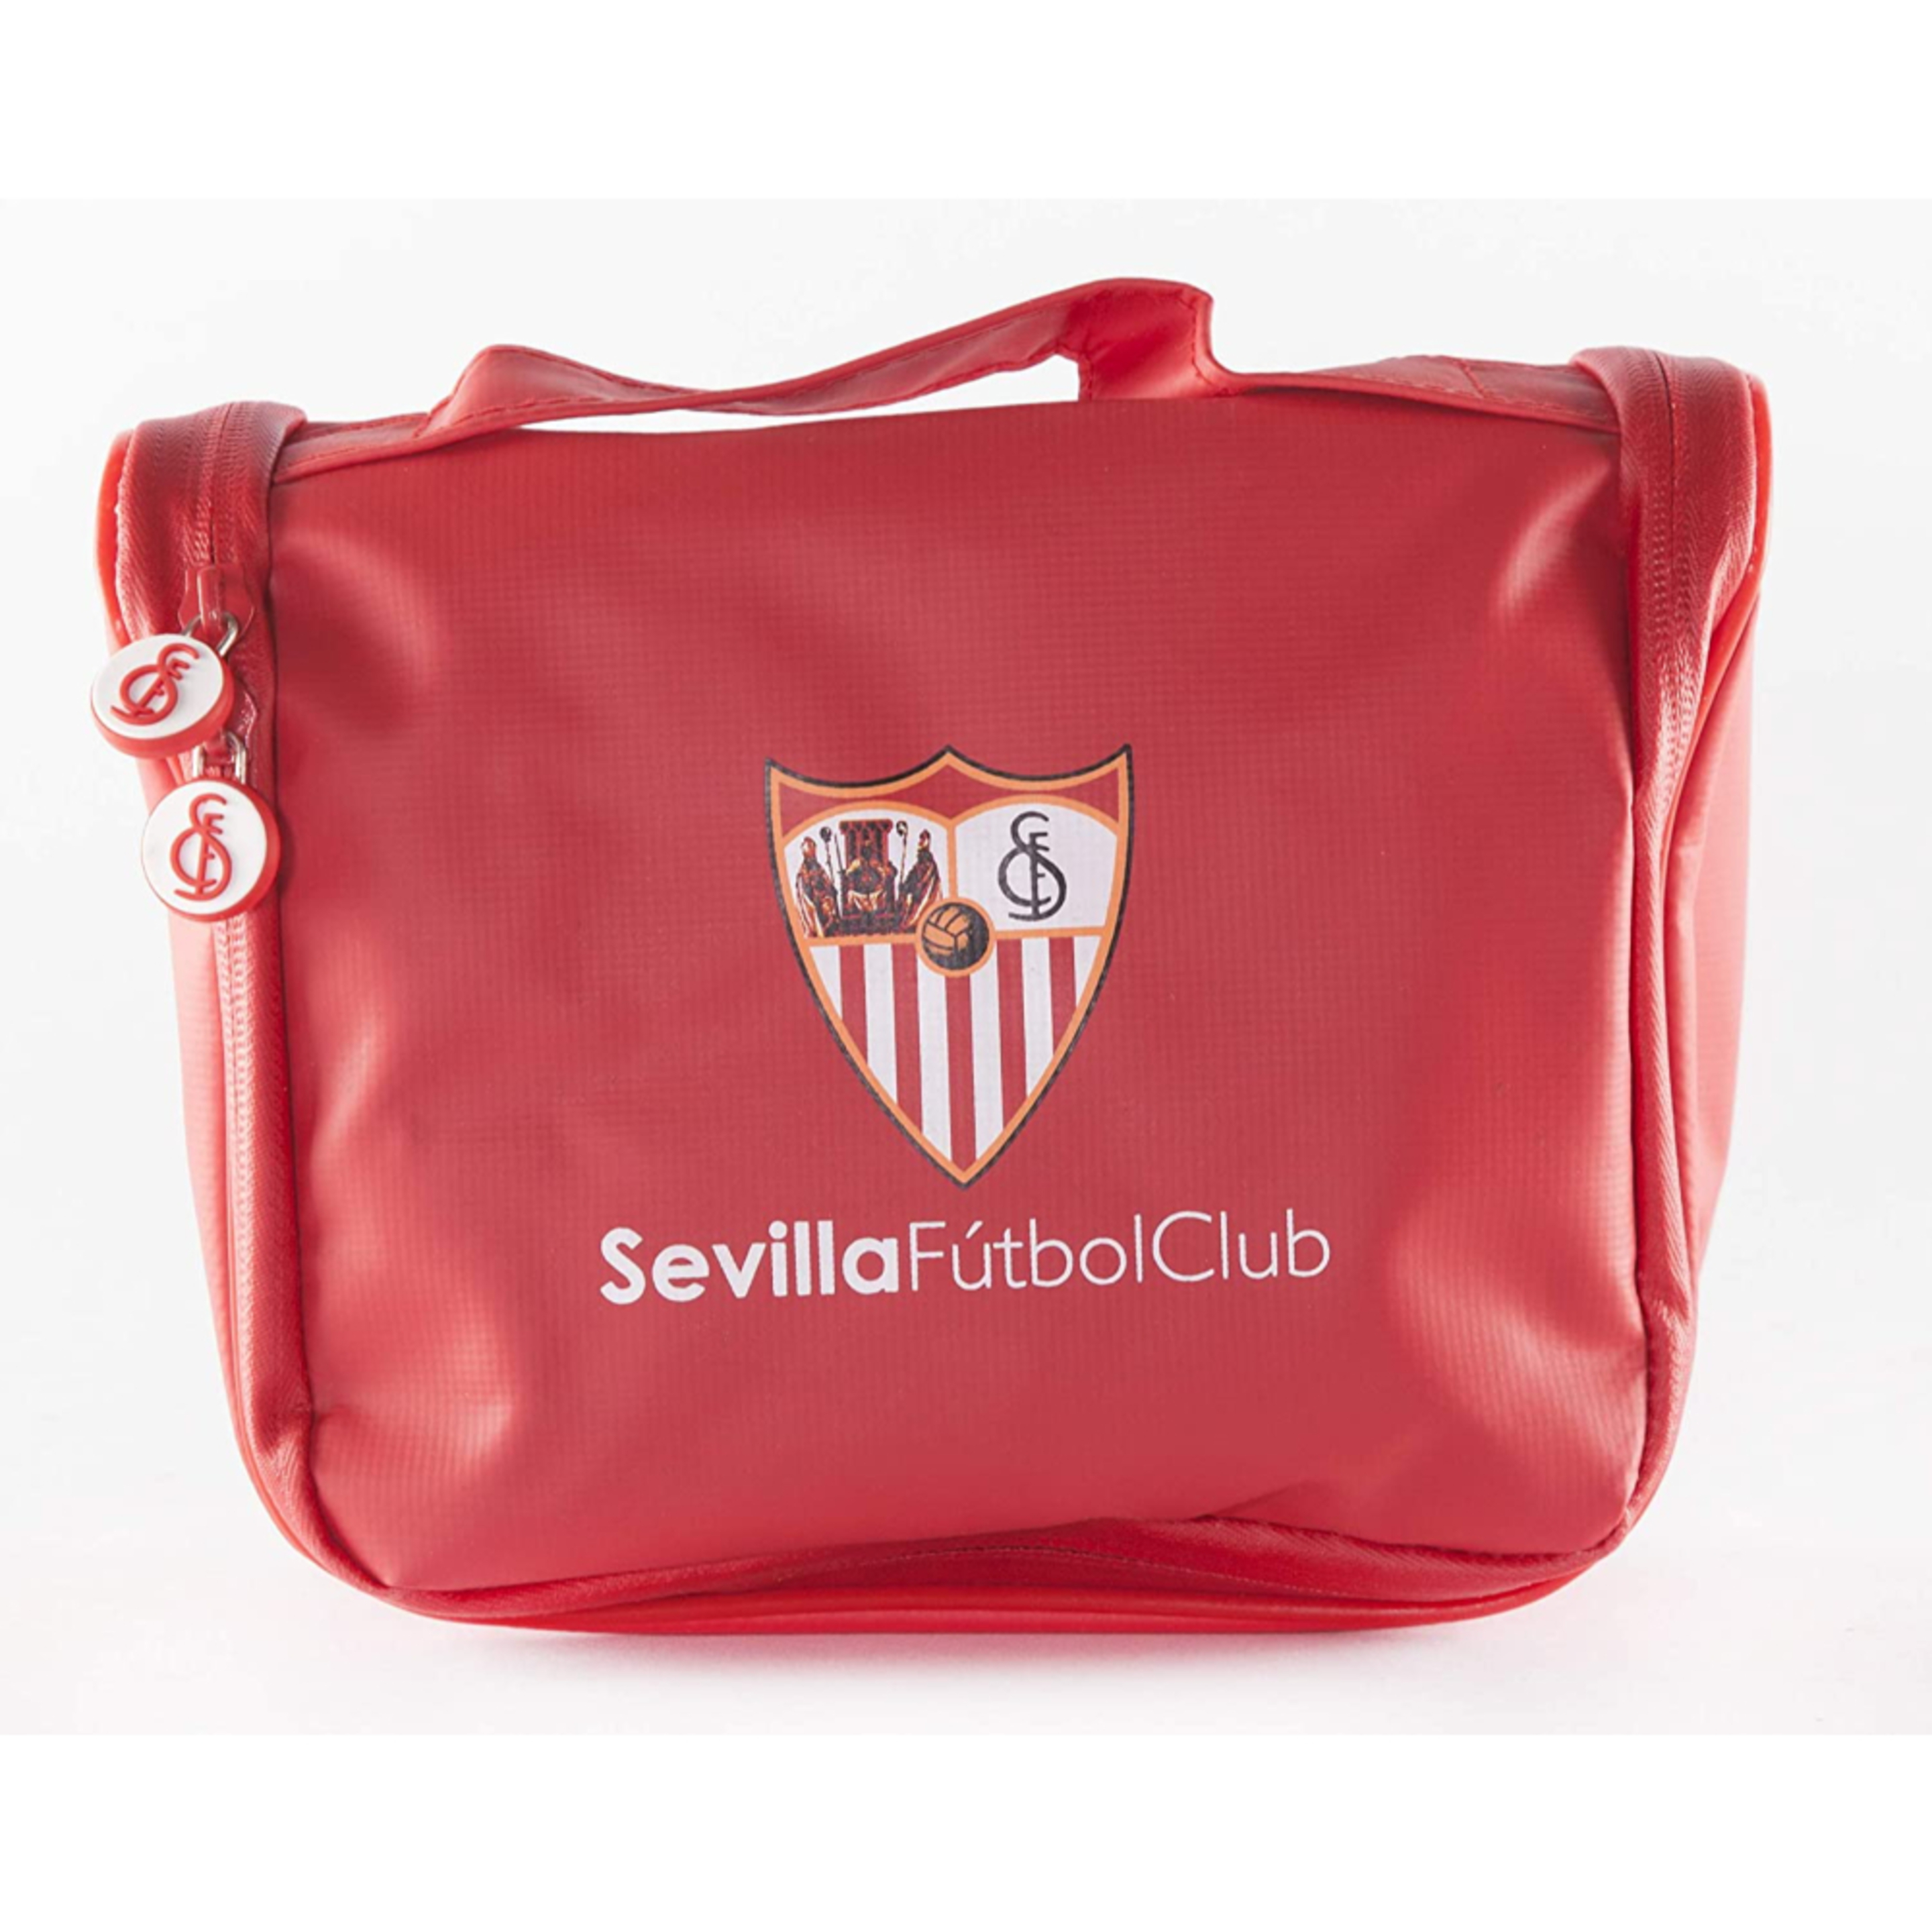 Eu Preciso Do Clube De Futebol De Sevilla